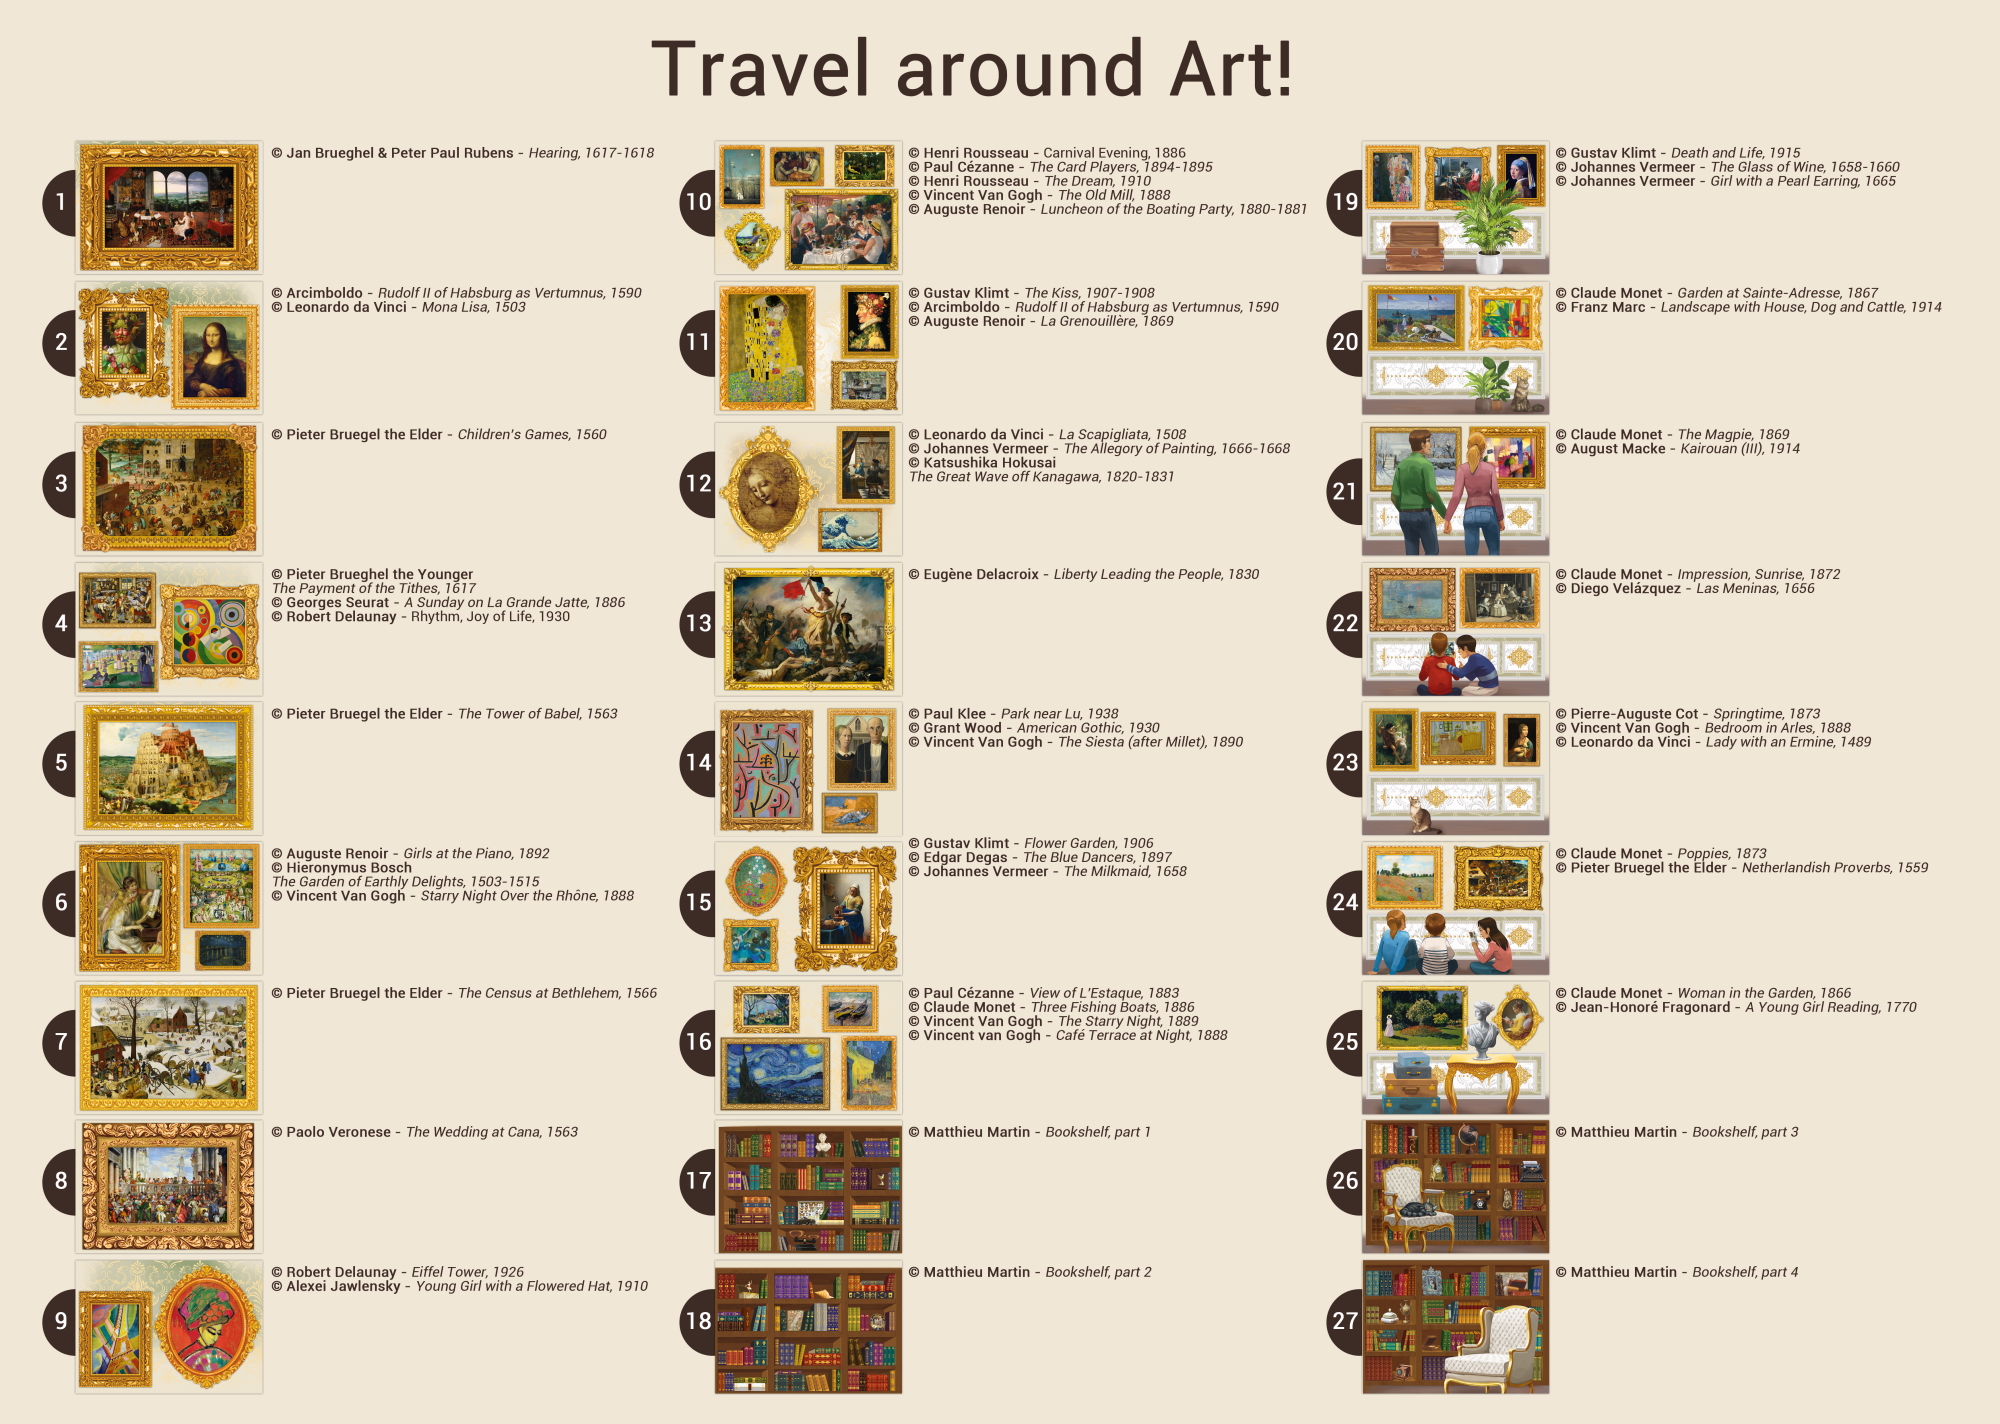 plus-grand-puzzle-du-monde-travel-around-art-puzzle-54000-pieces.81143-8.fs